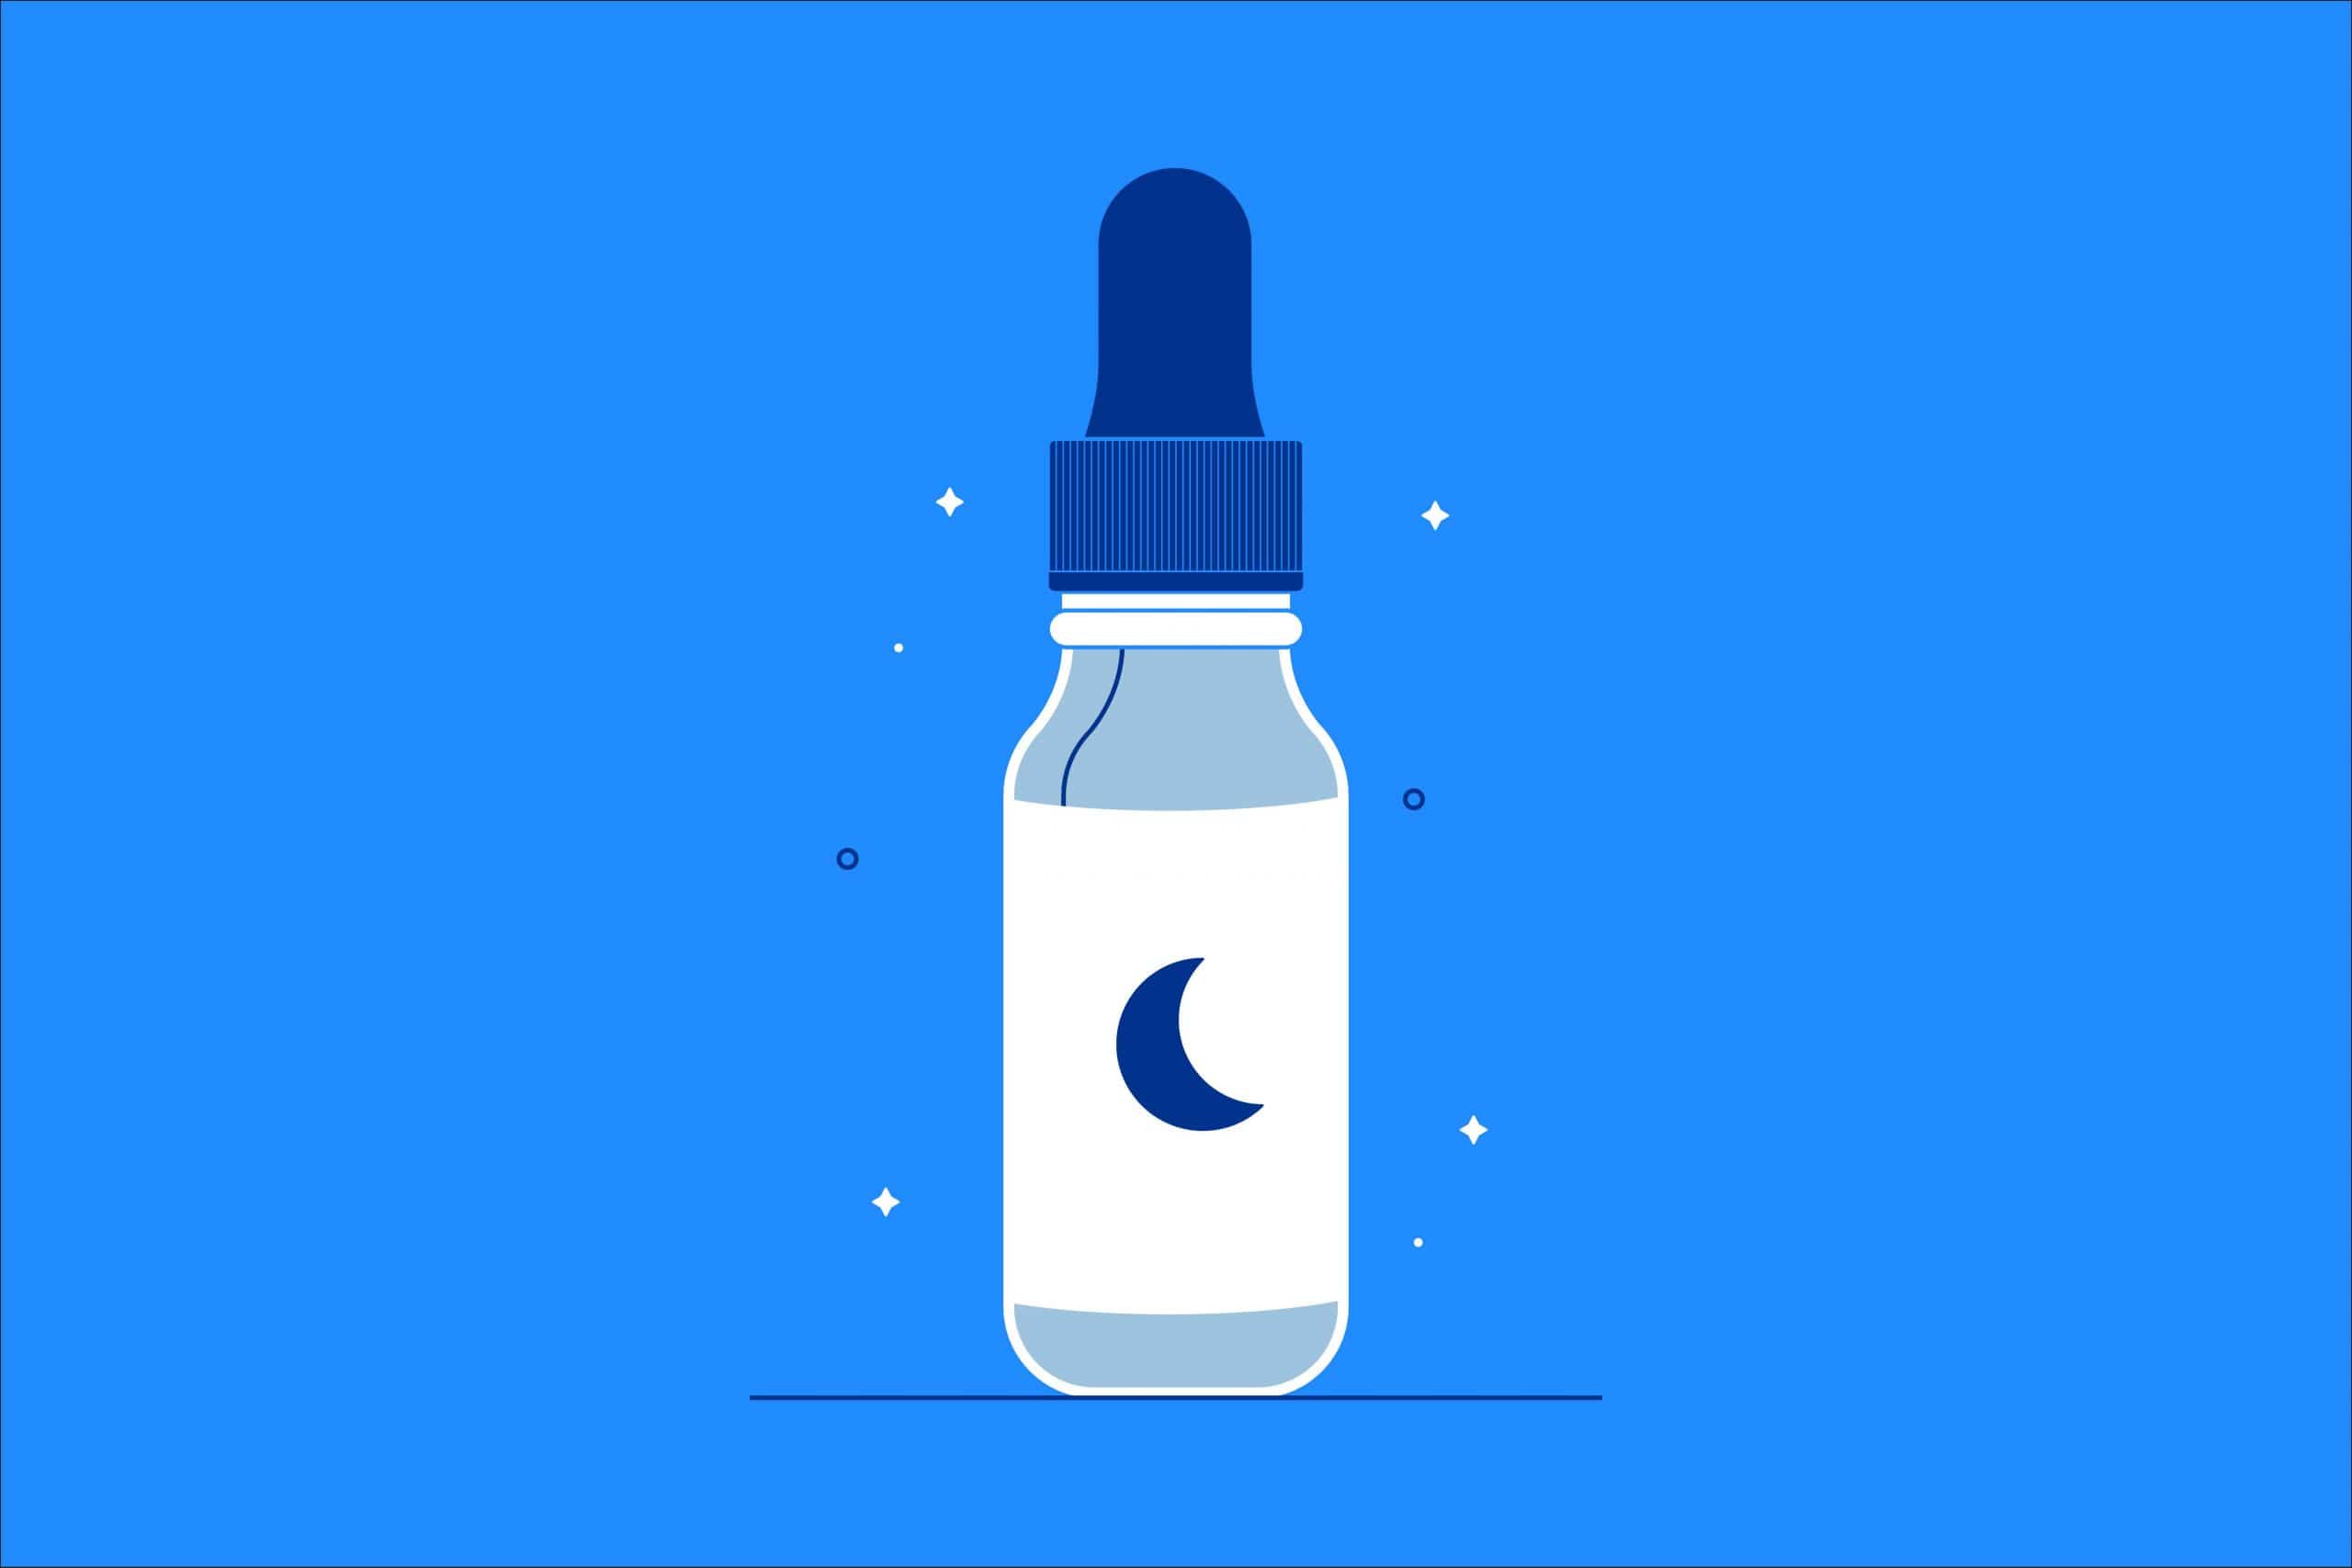 Best Essential Oils for Sleep